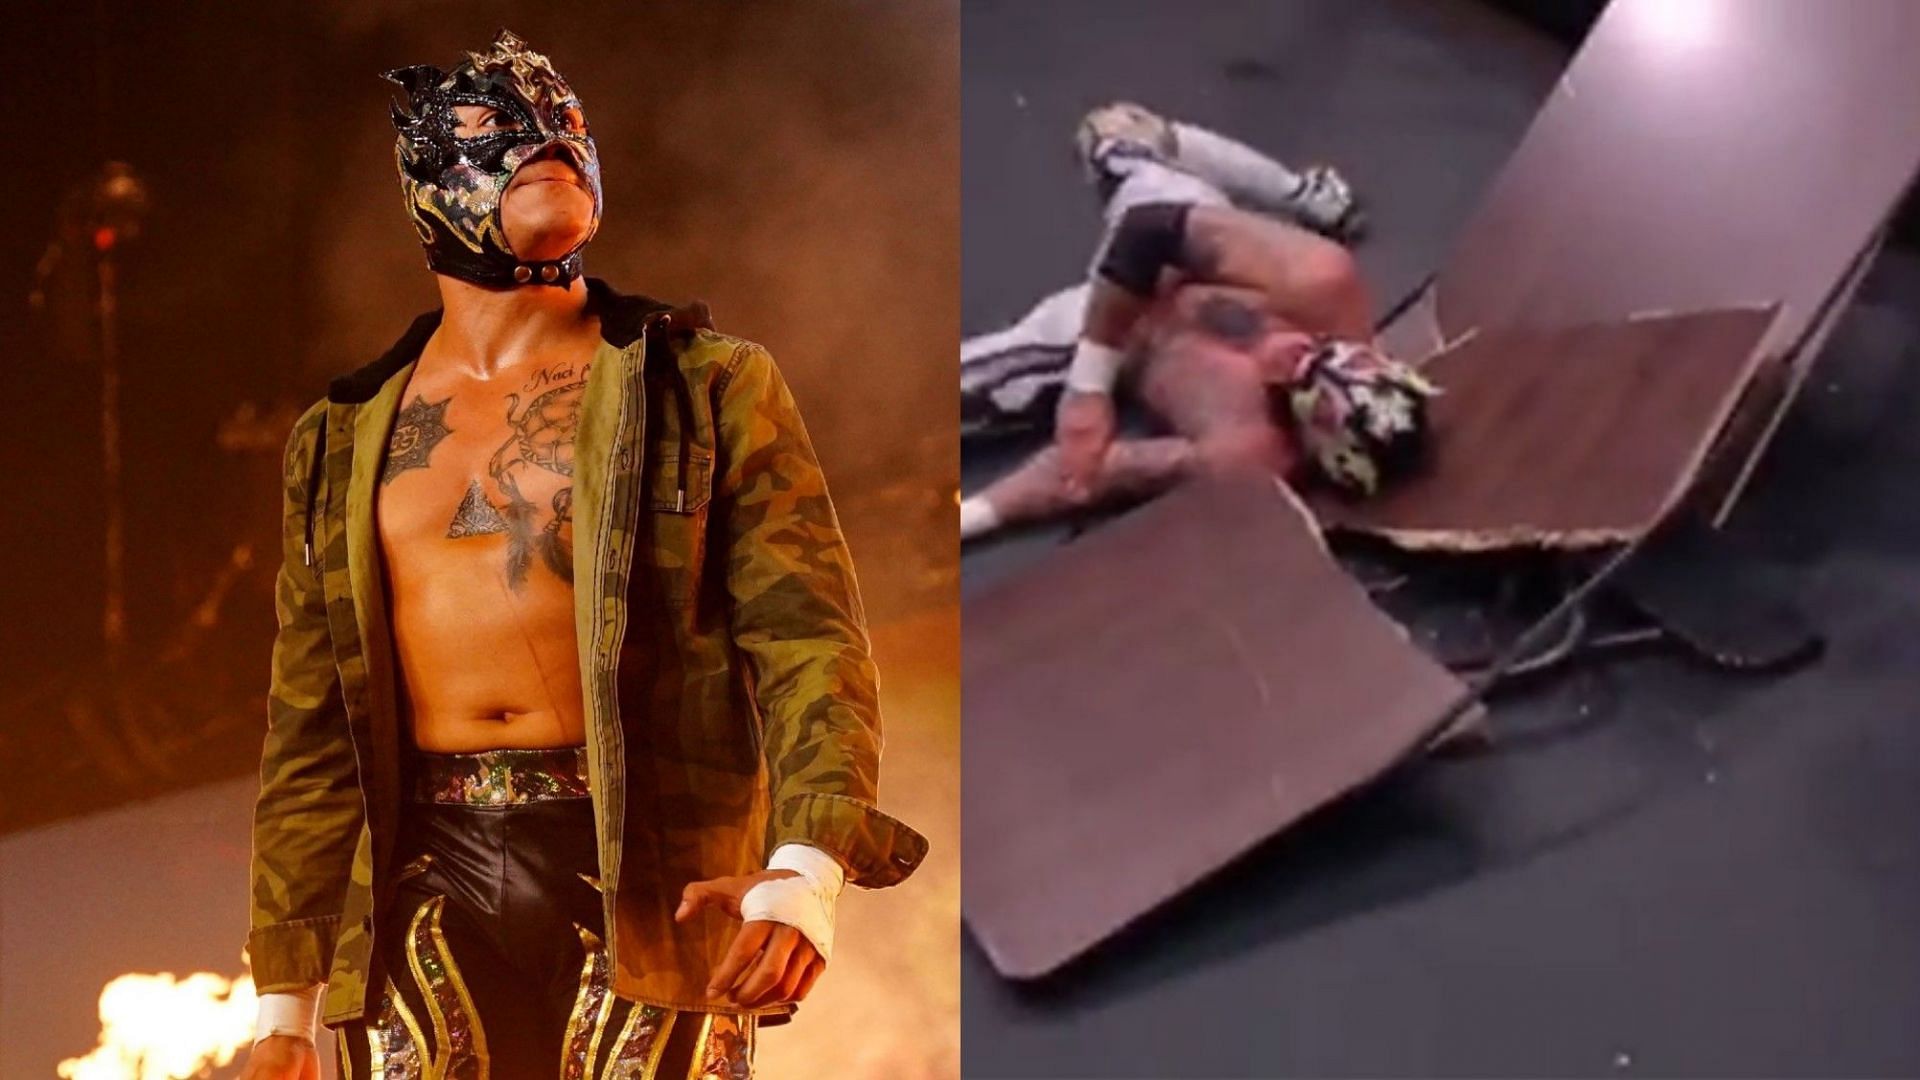 Rey Fenix took a nasty fall on AEW Dynamite last night!